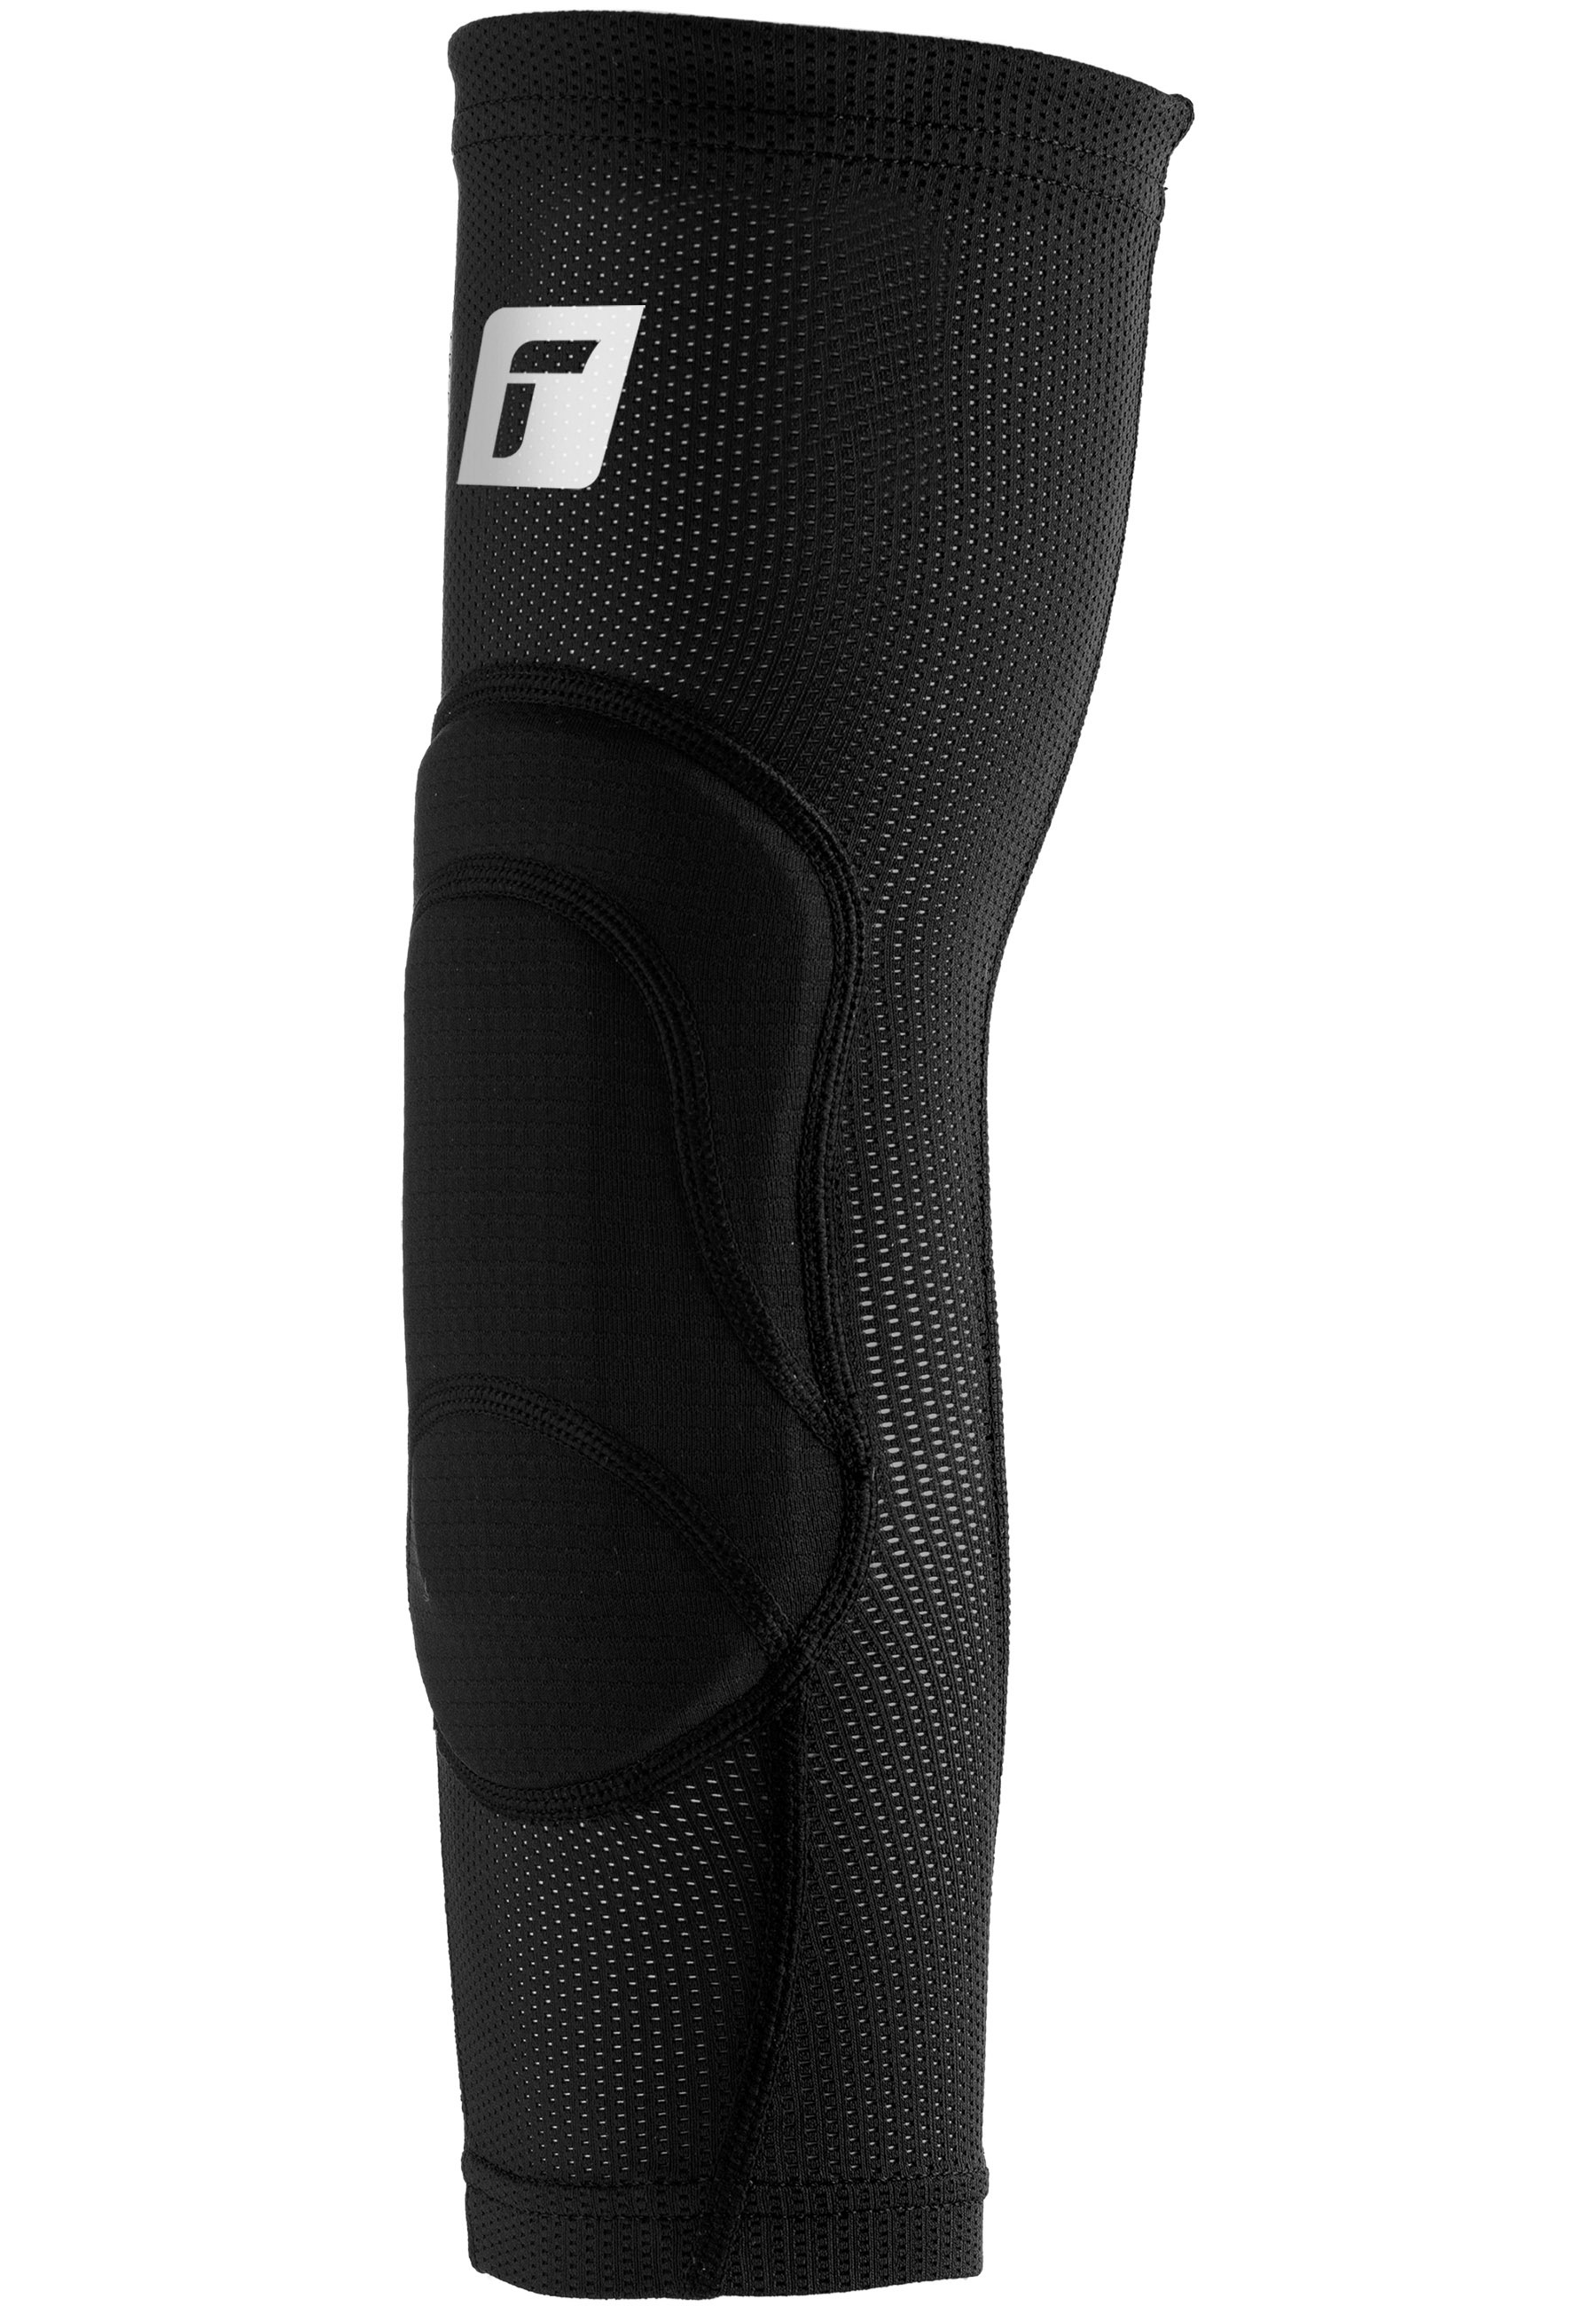 Reusch Knieprotektor »Supreme Elbow Protector Sleeve«, mit rutschfestem Silikonband